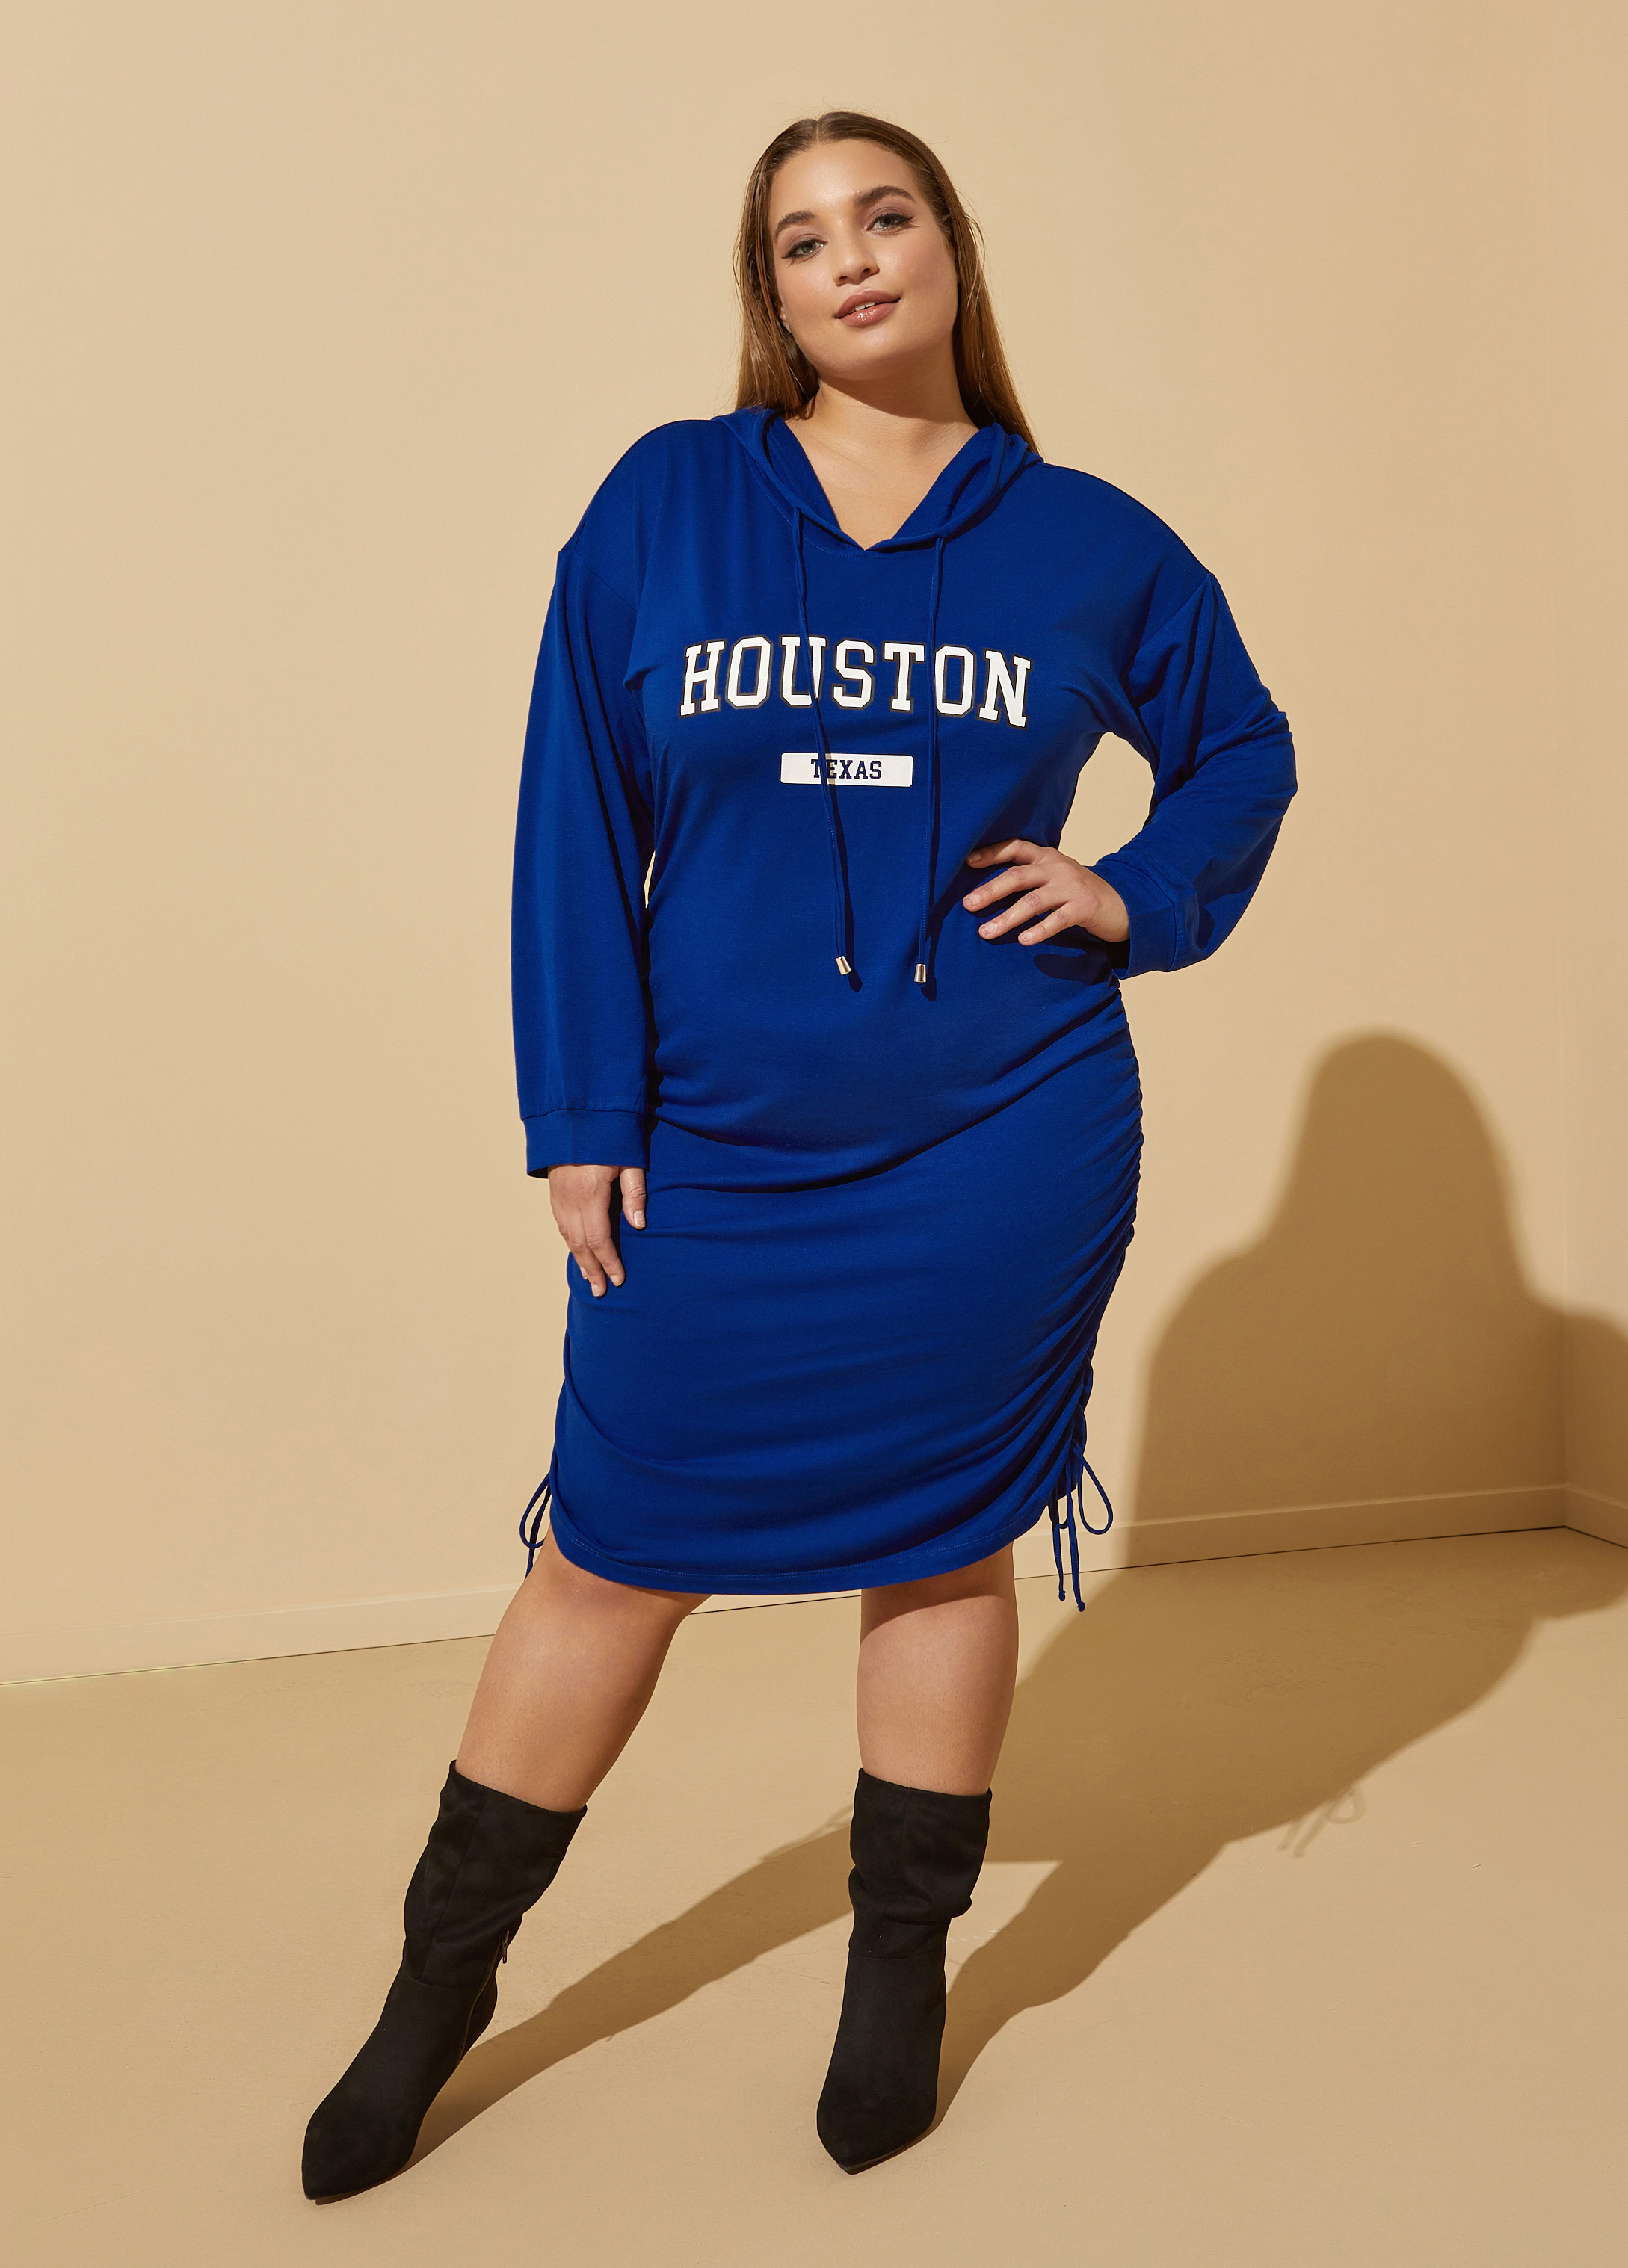 Plus Size Houston Ruched Hoodie Dress, BLUE, 26/28 - Ashley Stewart